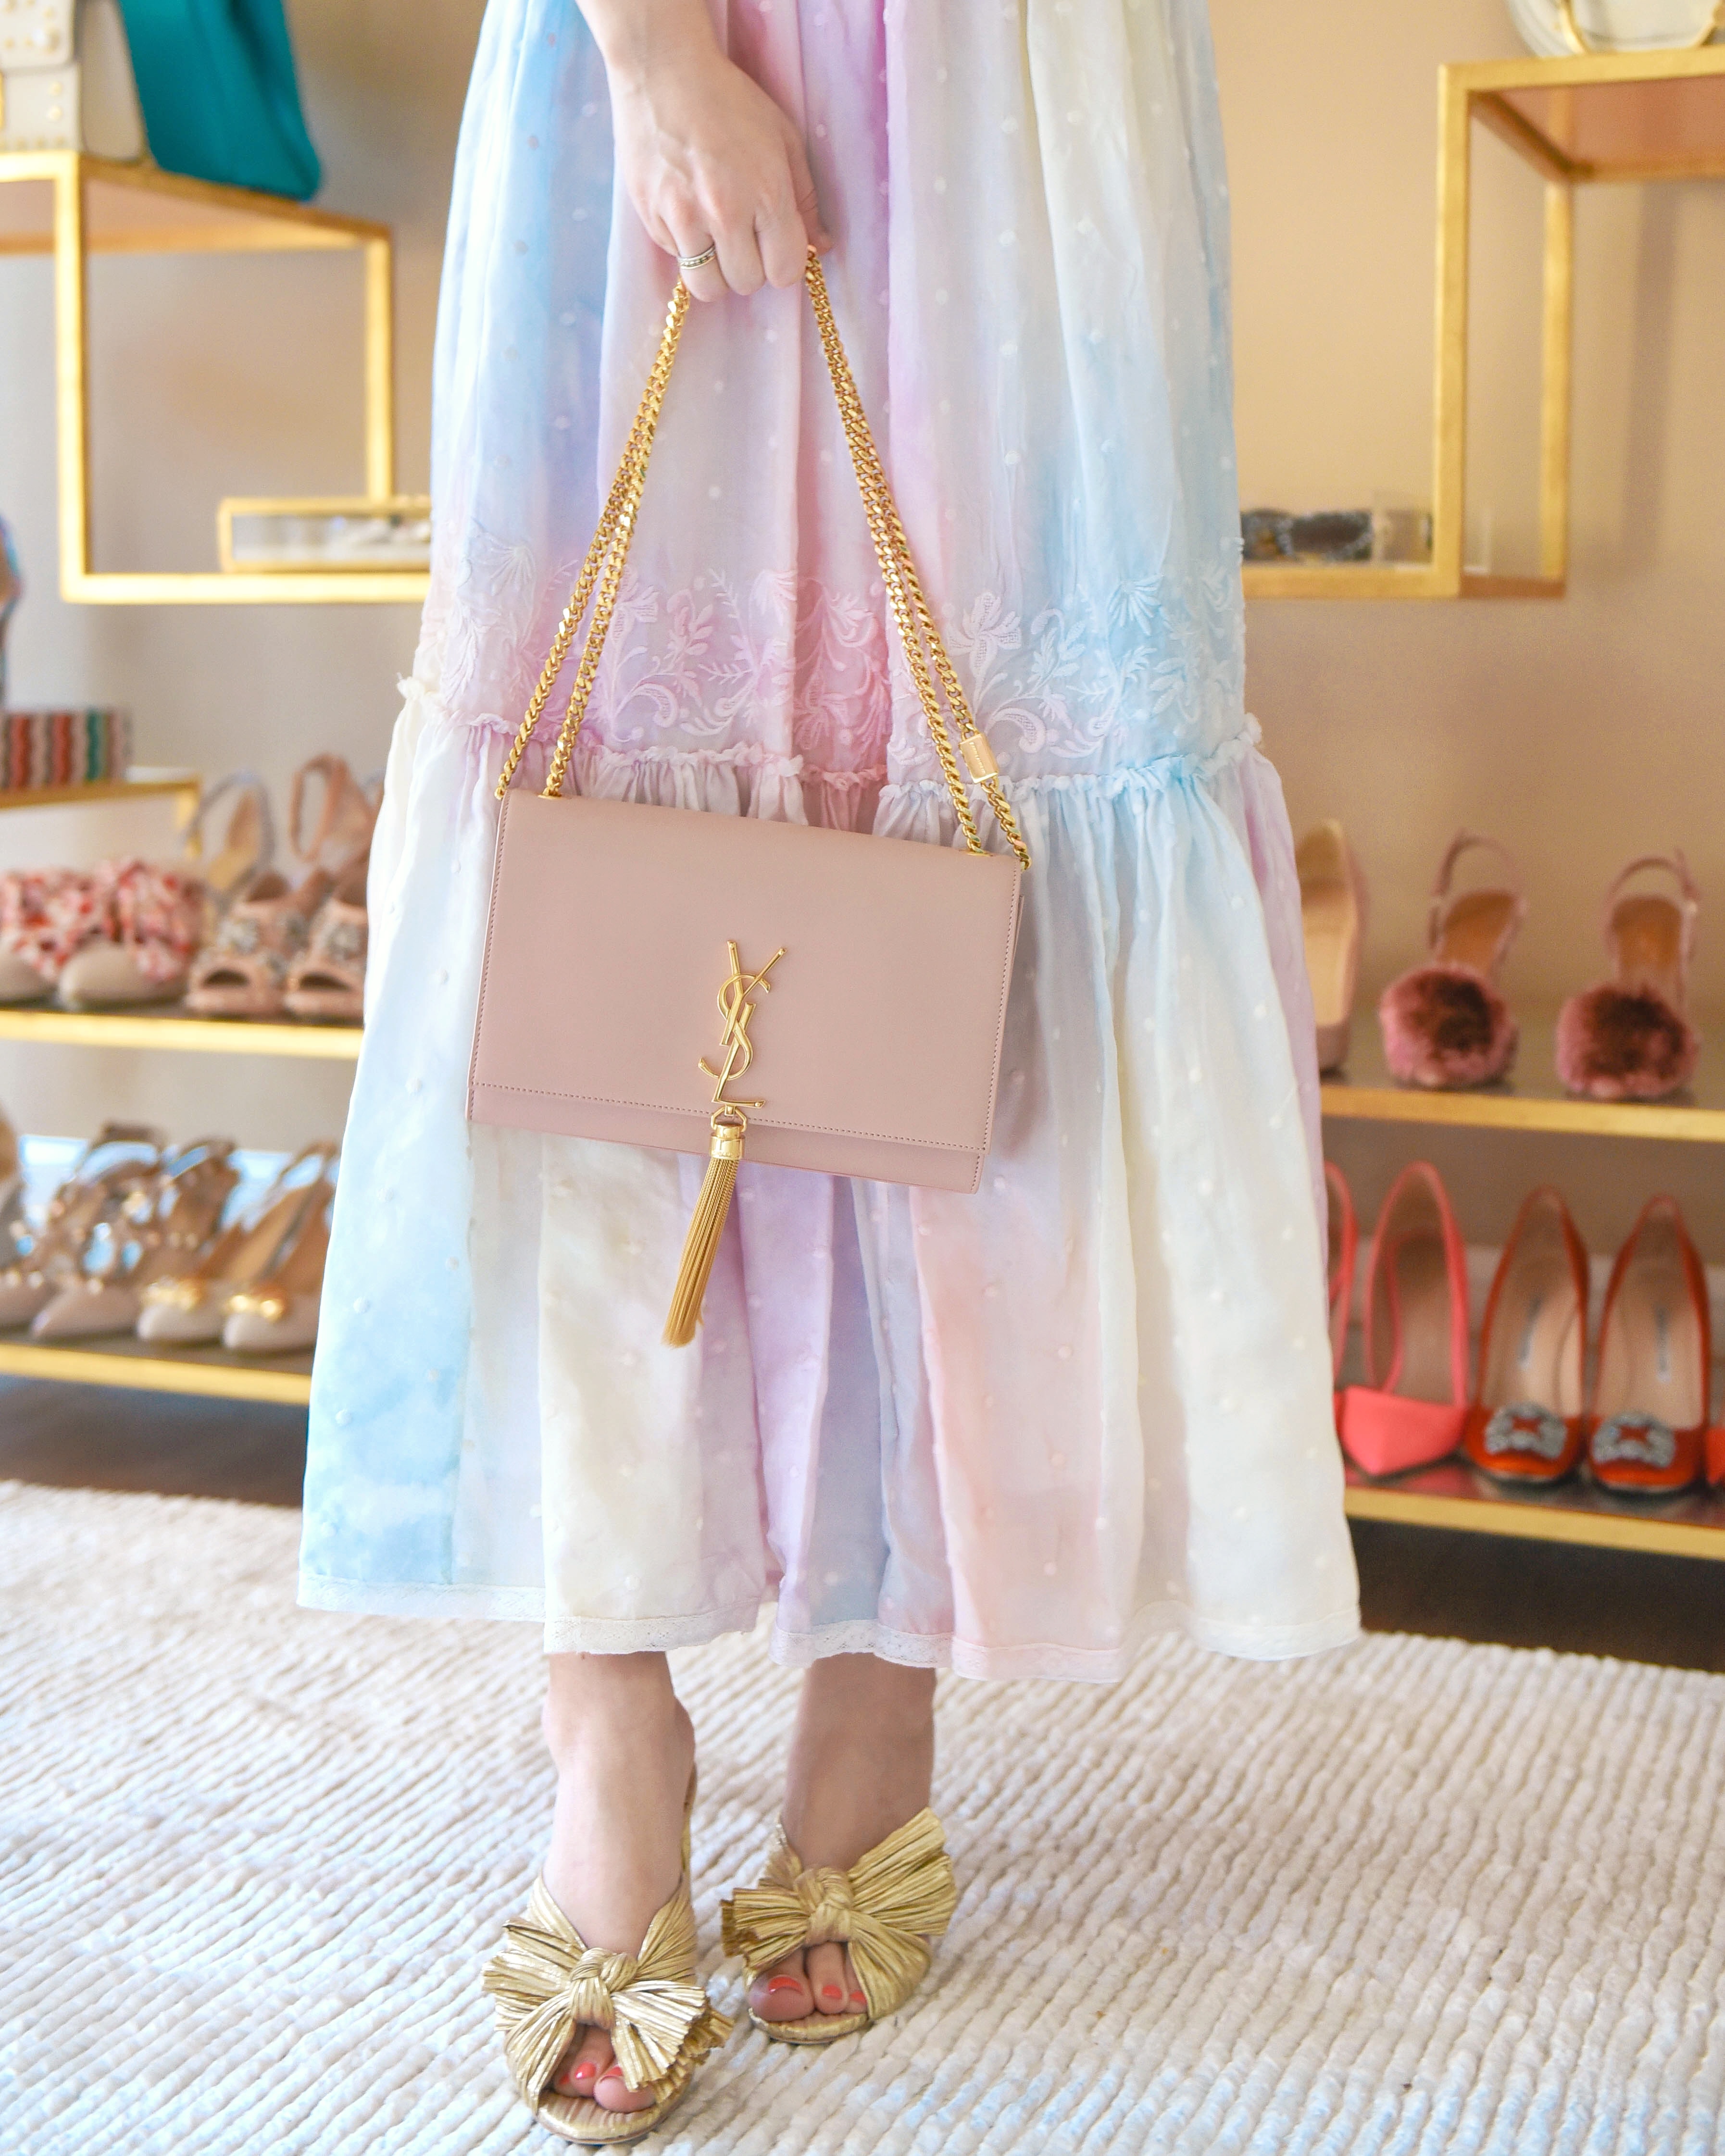 Lo-Murphy-eBay-Handbags-designer-handbag-saint-laurent-bag-pink-handbags-dallas-blogger